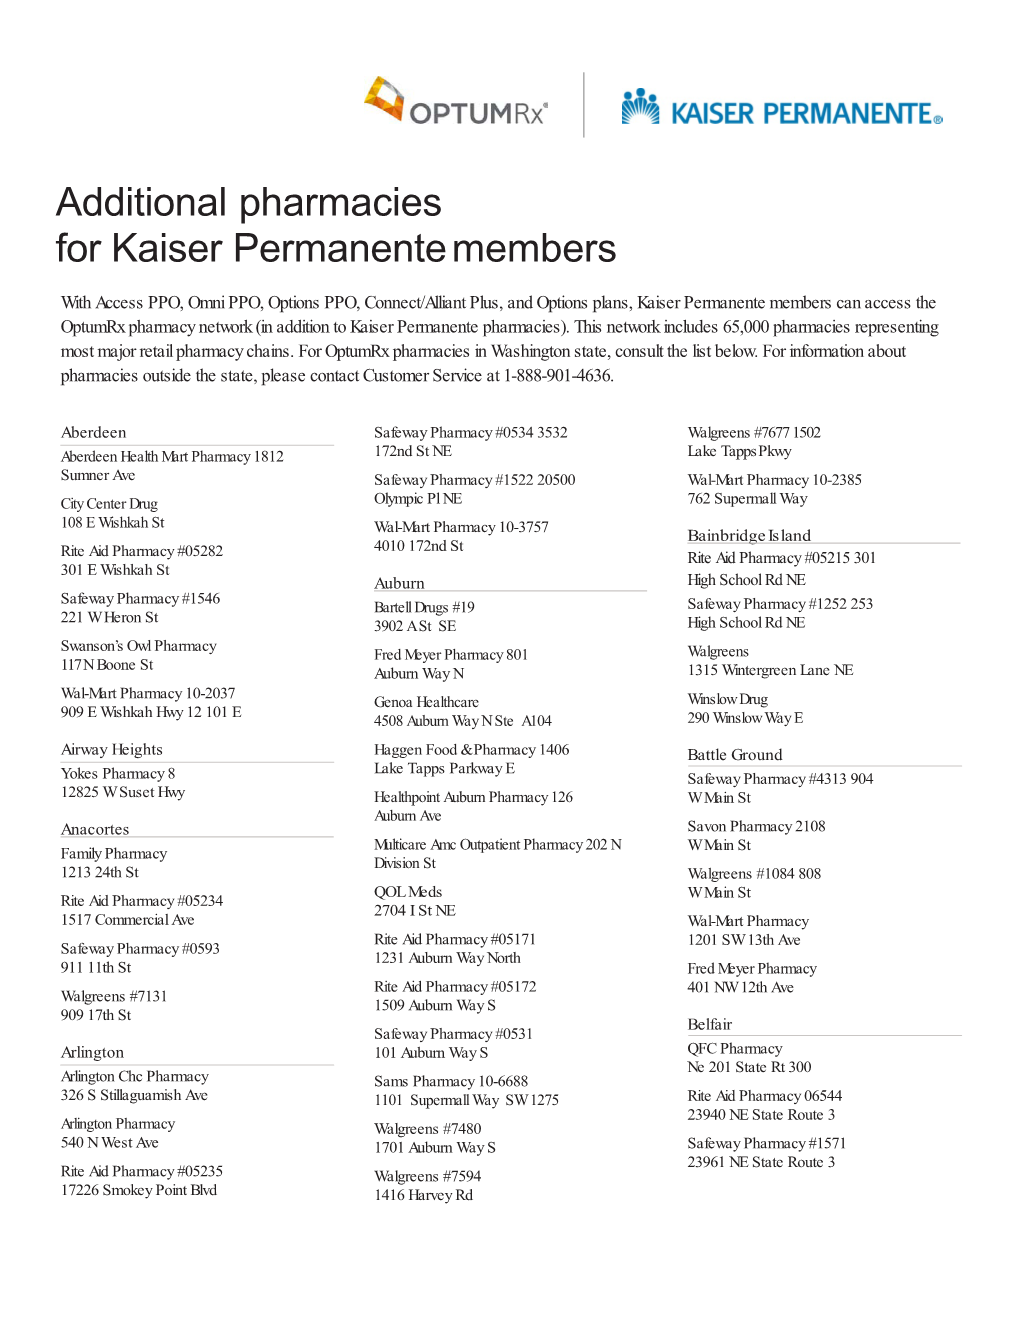 Optum Pharmacies in Washington State